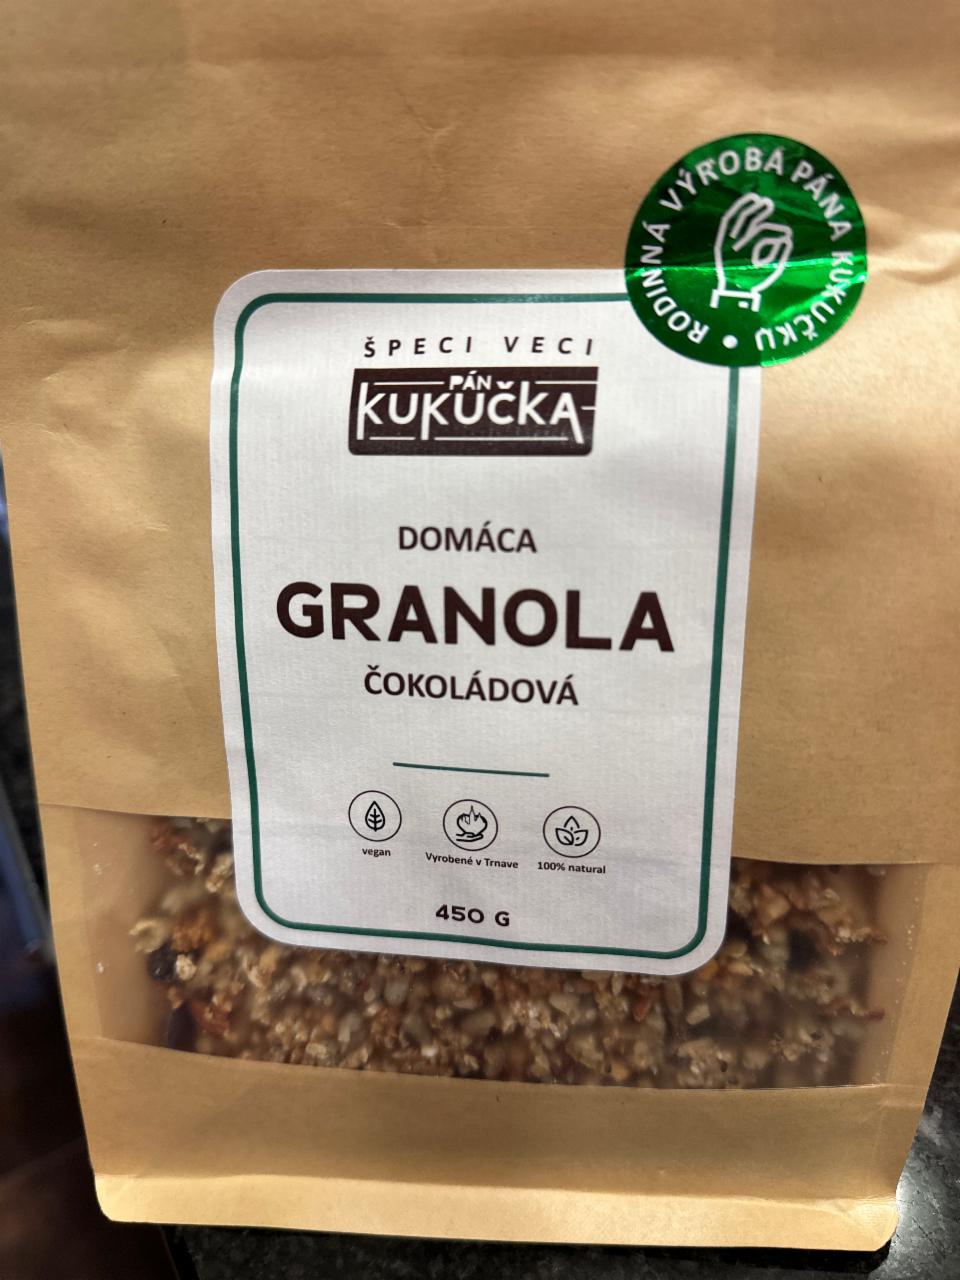 Fotografie - Domáca pečená granola čokoládová Špeci veci pán Kukučka